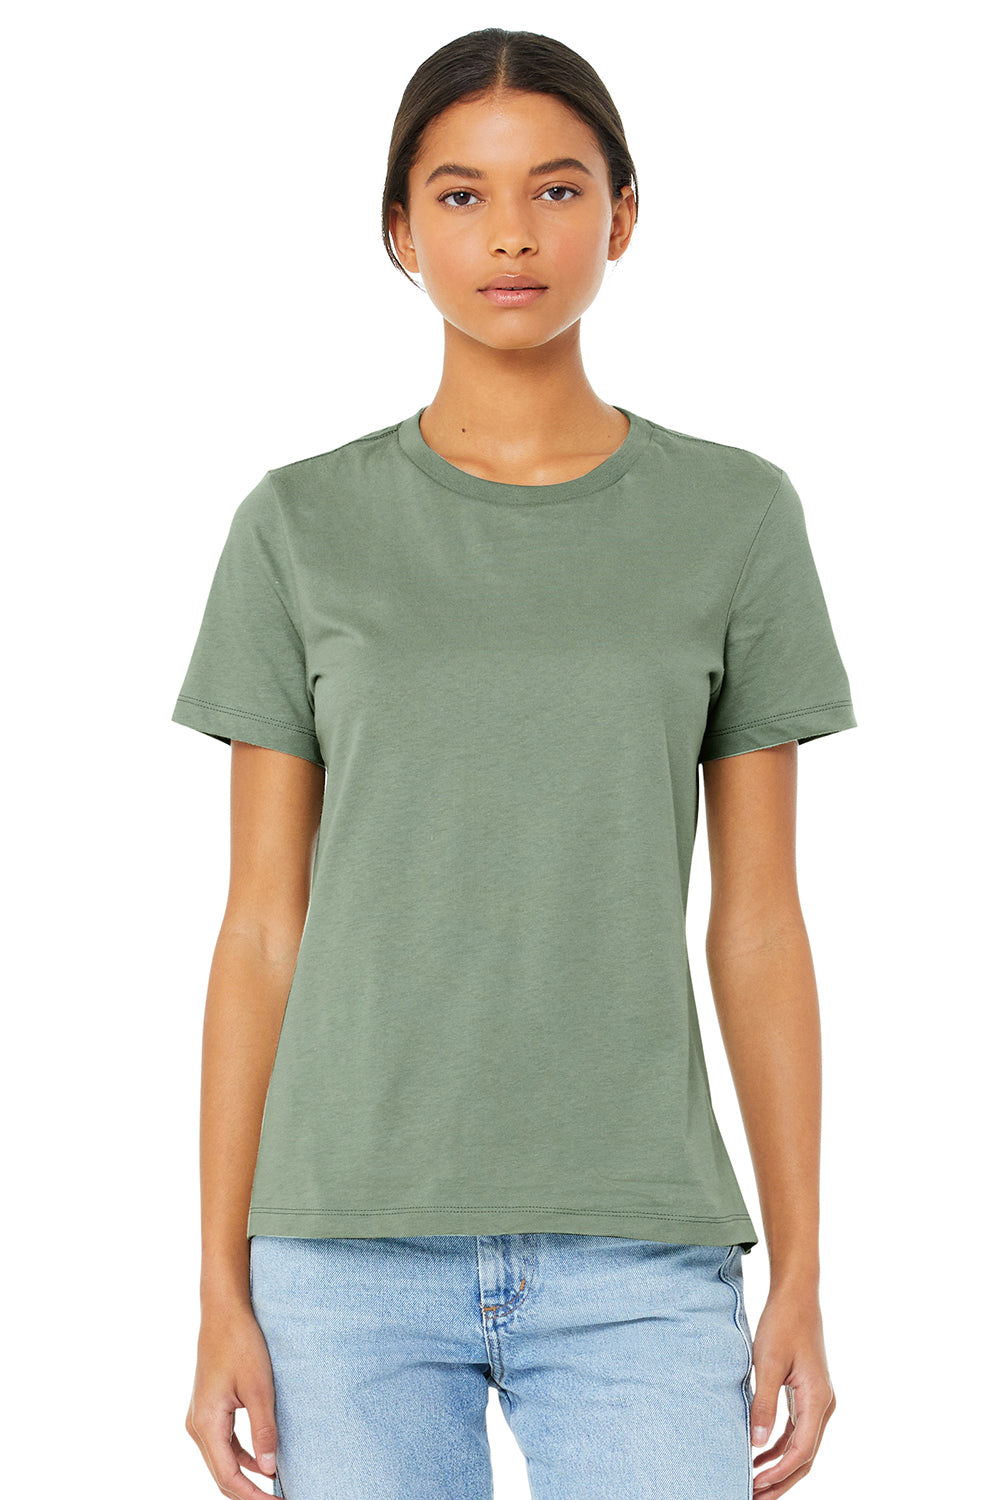 Bella + Canvas BC6400/B6400/6400 Womens Relaxed Jersey Short Sleeve Crewneck T-Shirt Sage Green Model Front